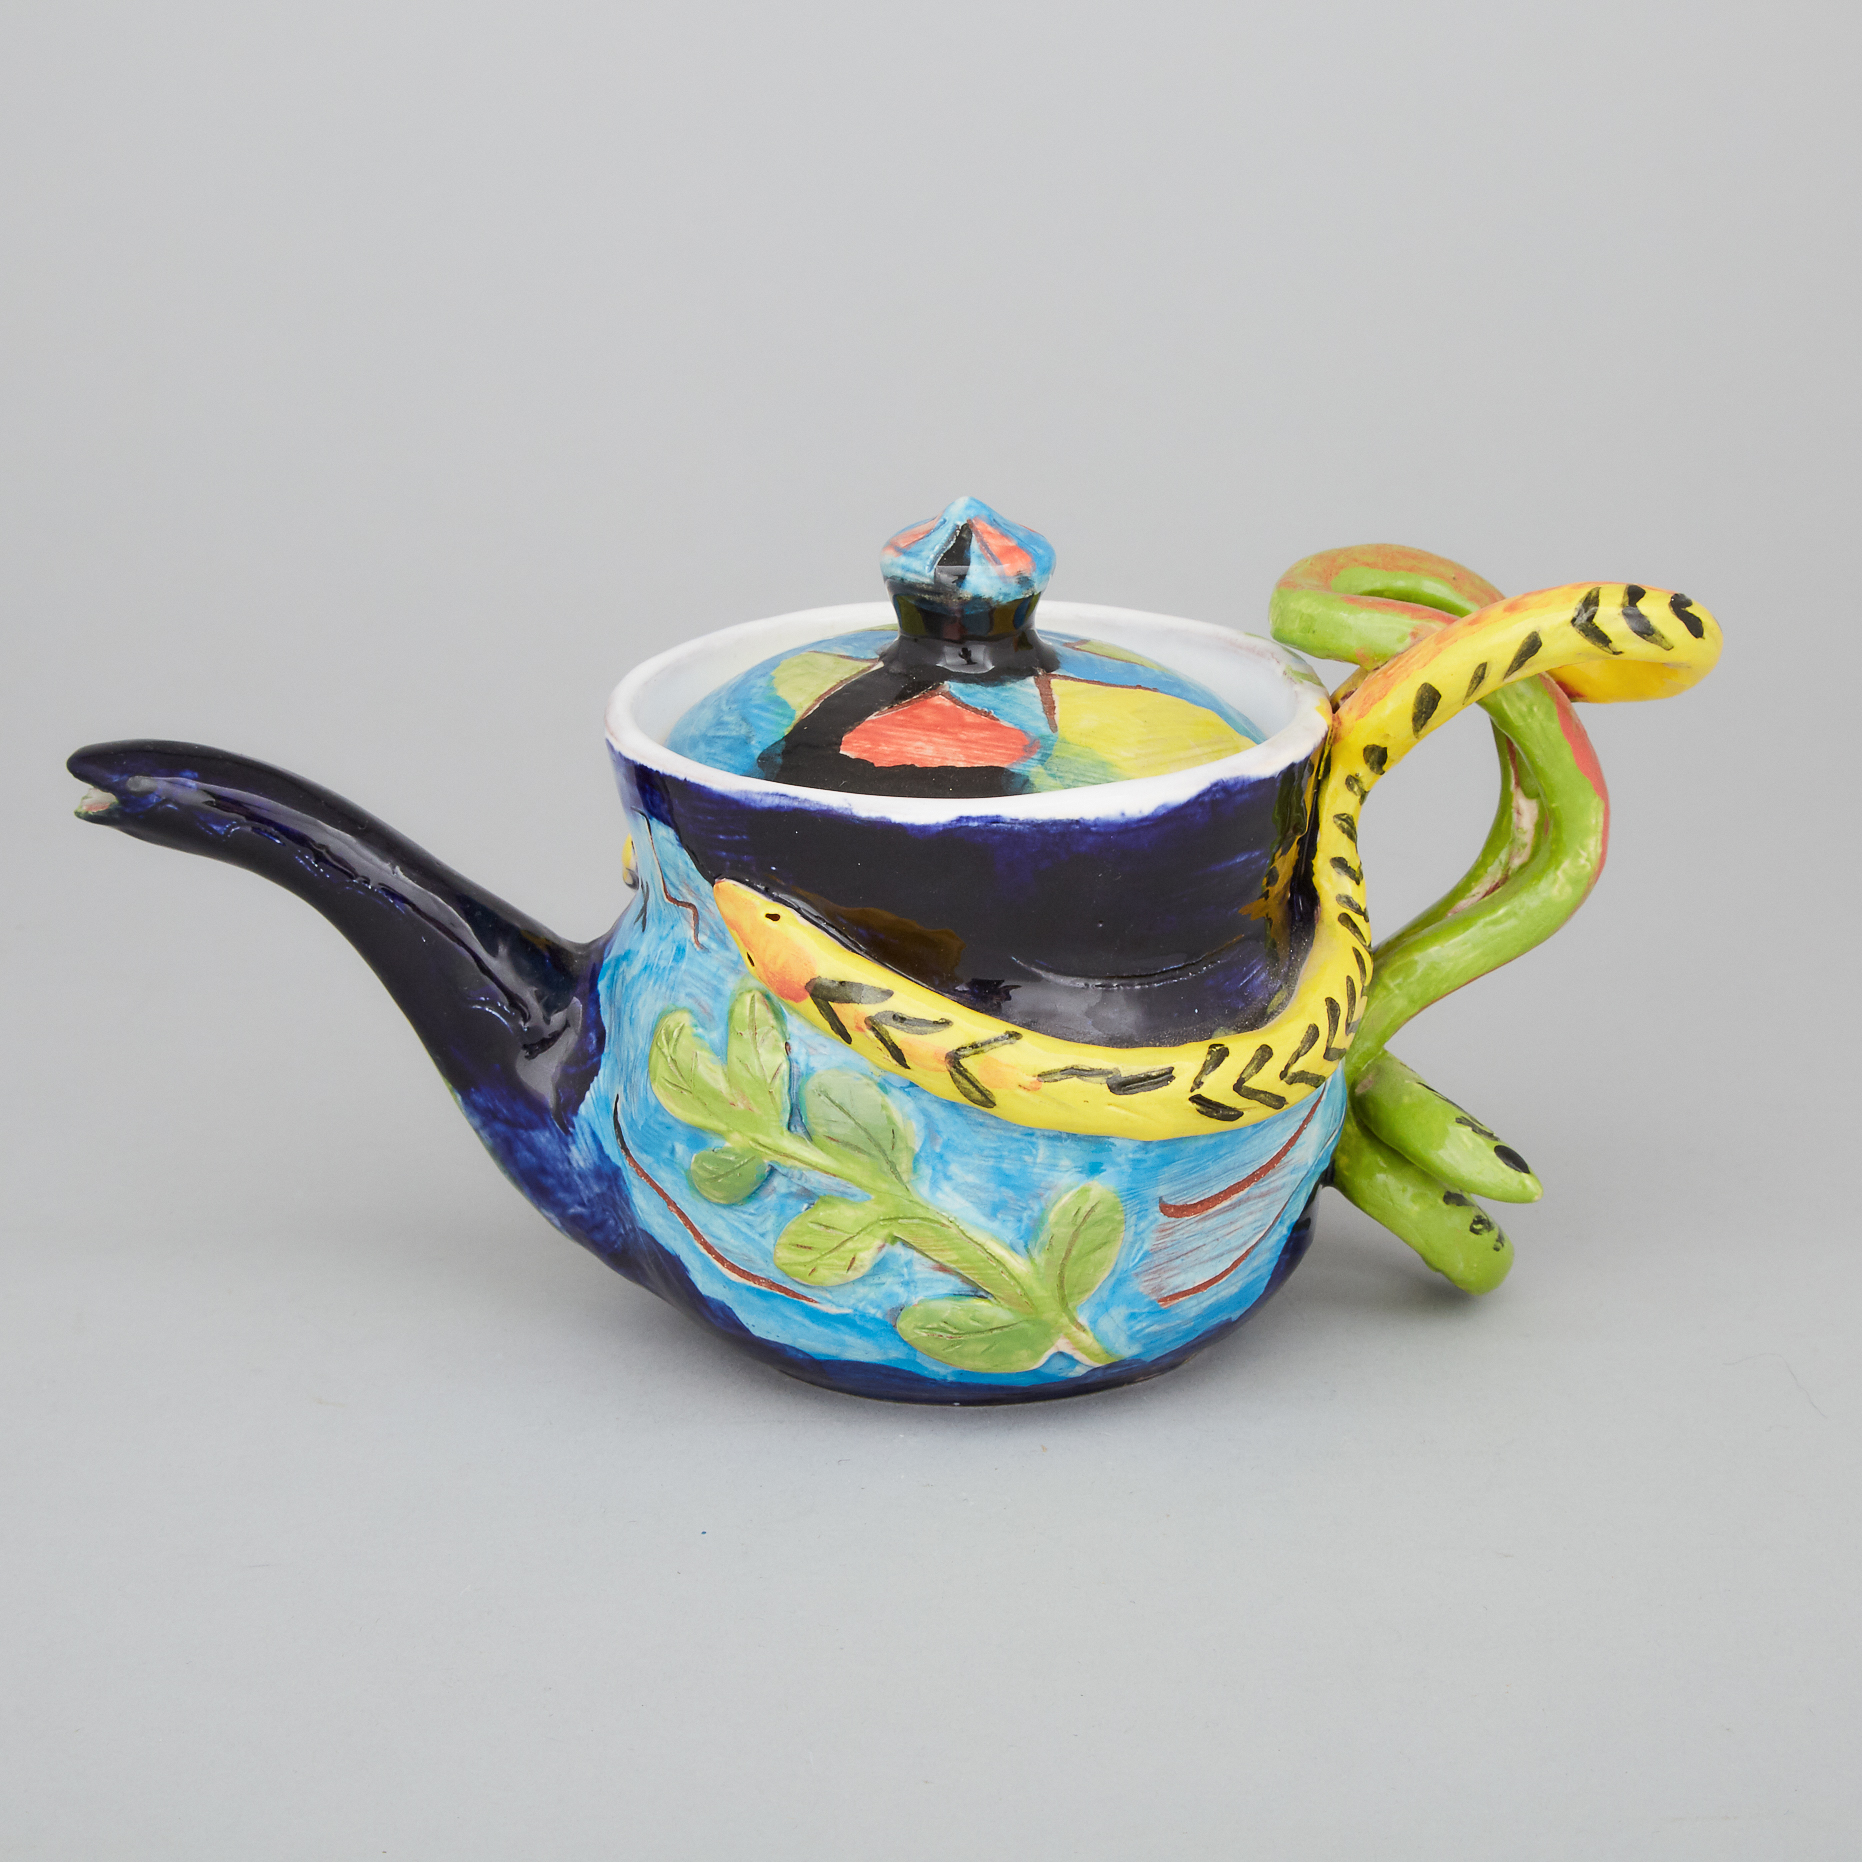 Mimi Cabri (Canadian, b.1934), Serpent Teapot, 1990s